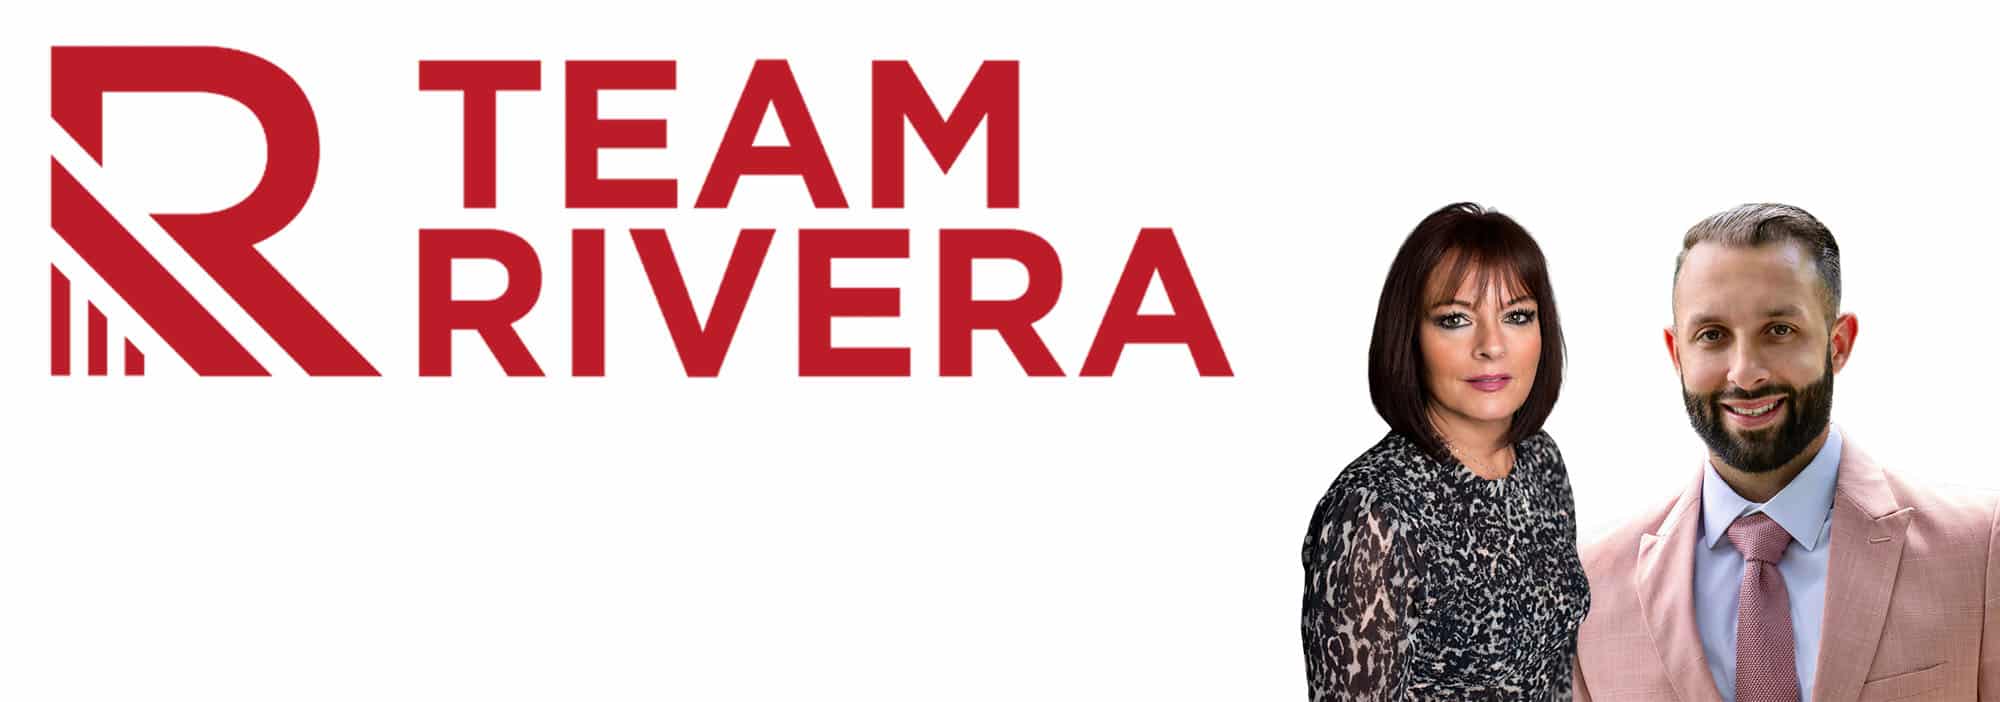 New Team Photo - Team Rivera